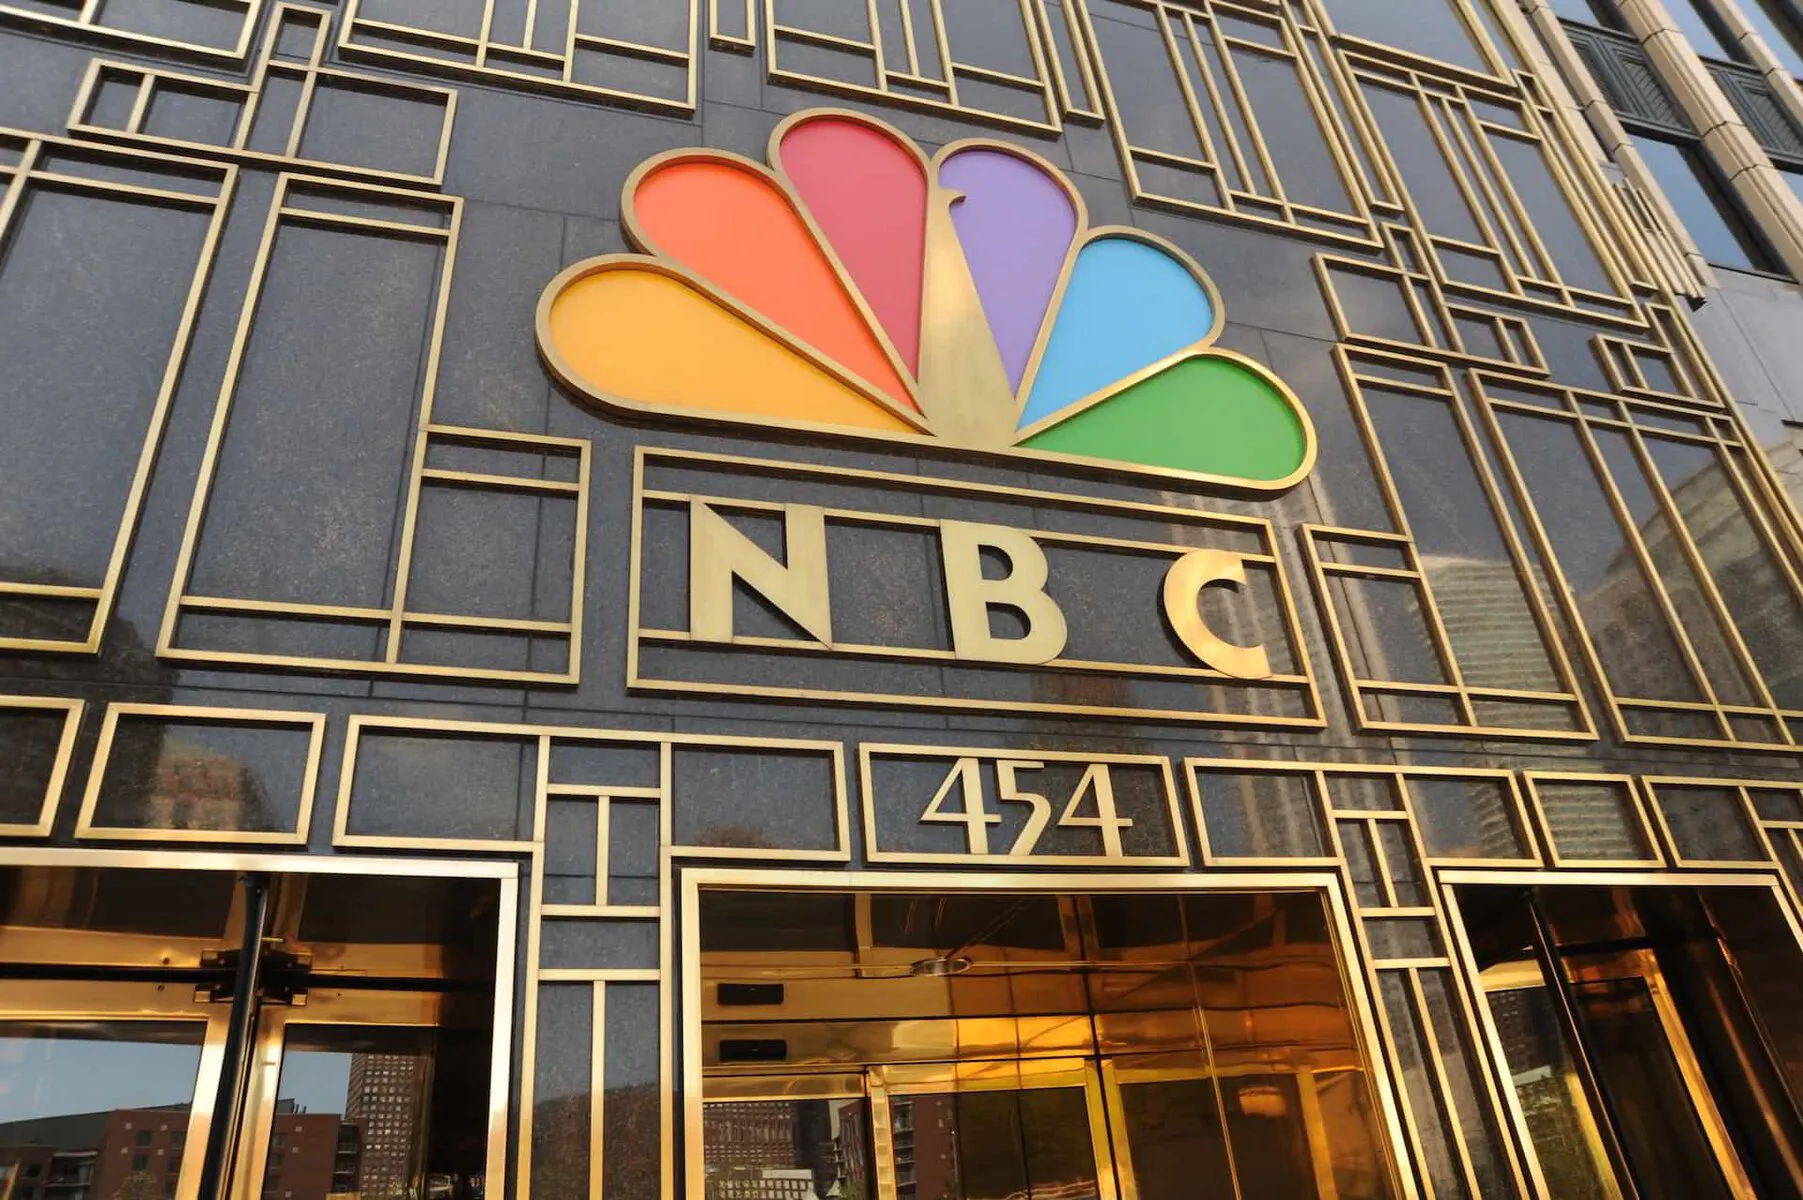 NBC building NYC